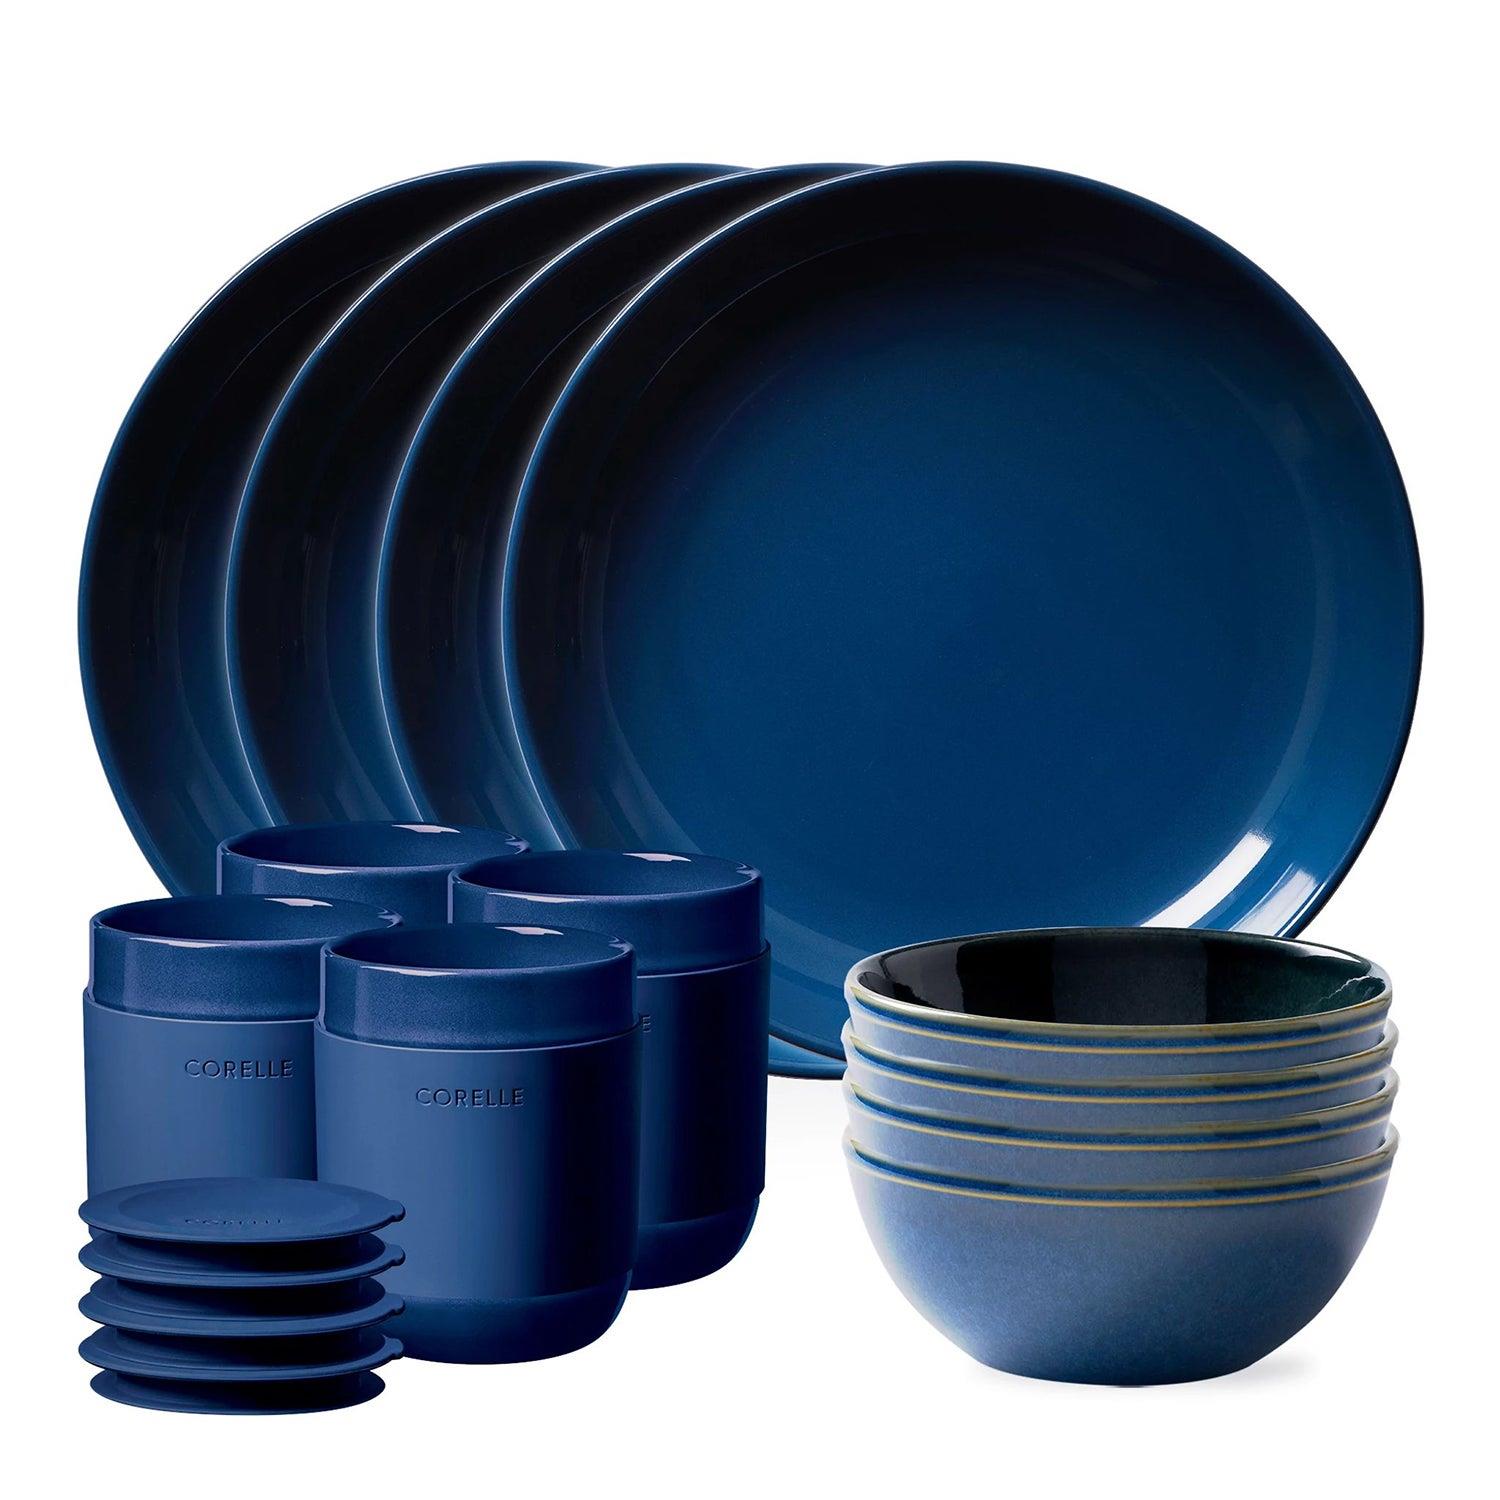 16pc Corelle GARDEN LACE Dinnerware Set *TEAL BLUE Turquoise Flourishes Swirls 